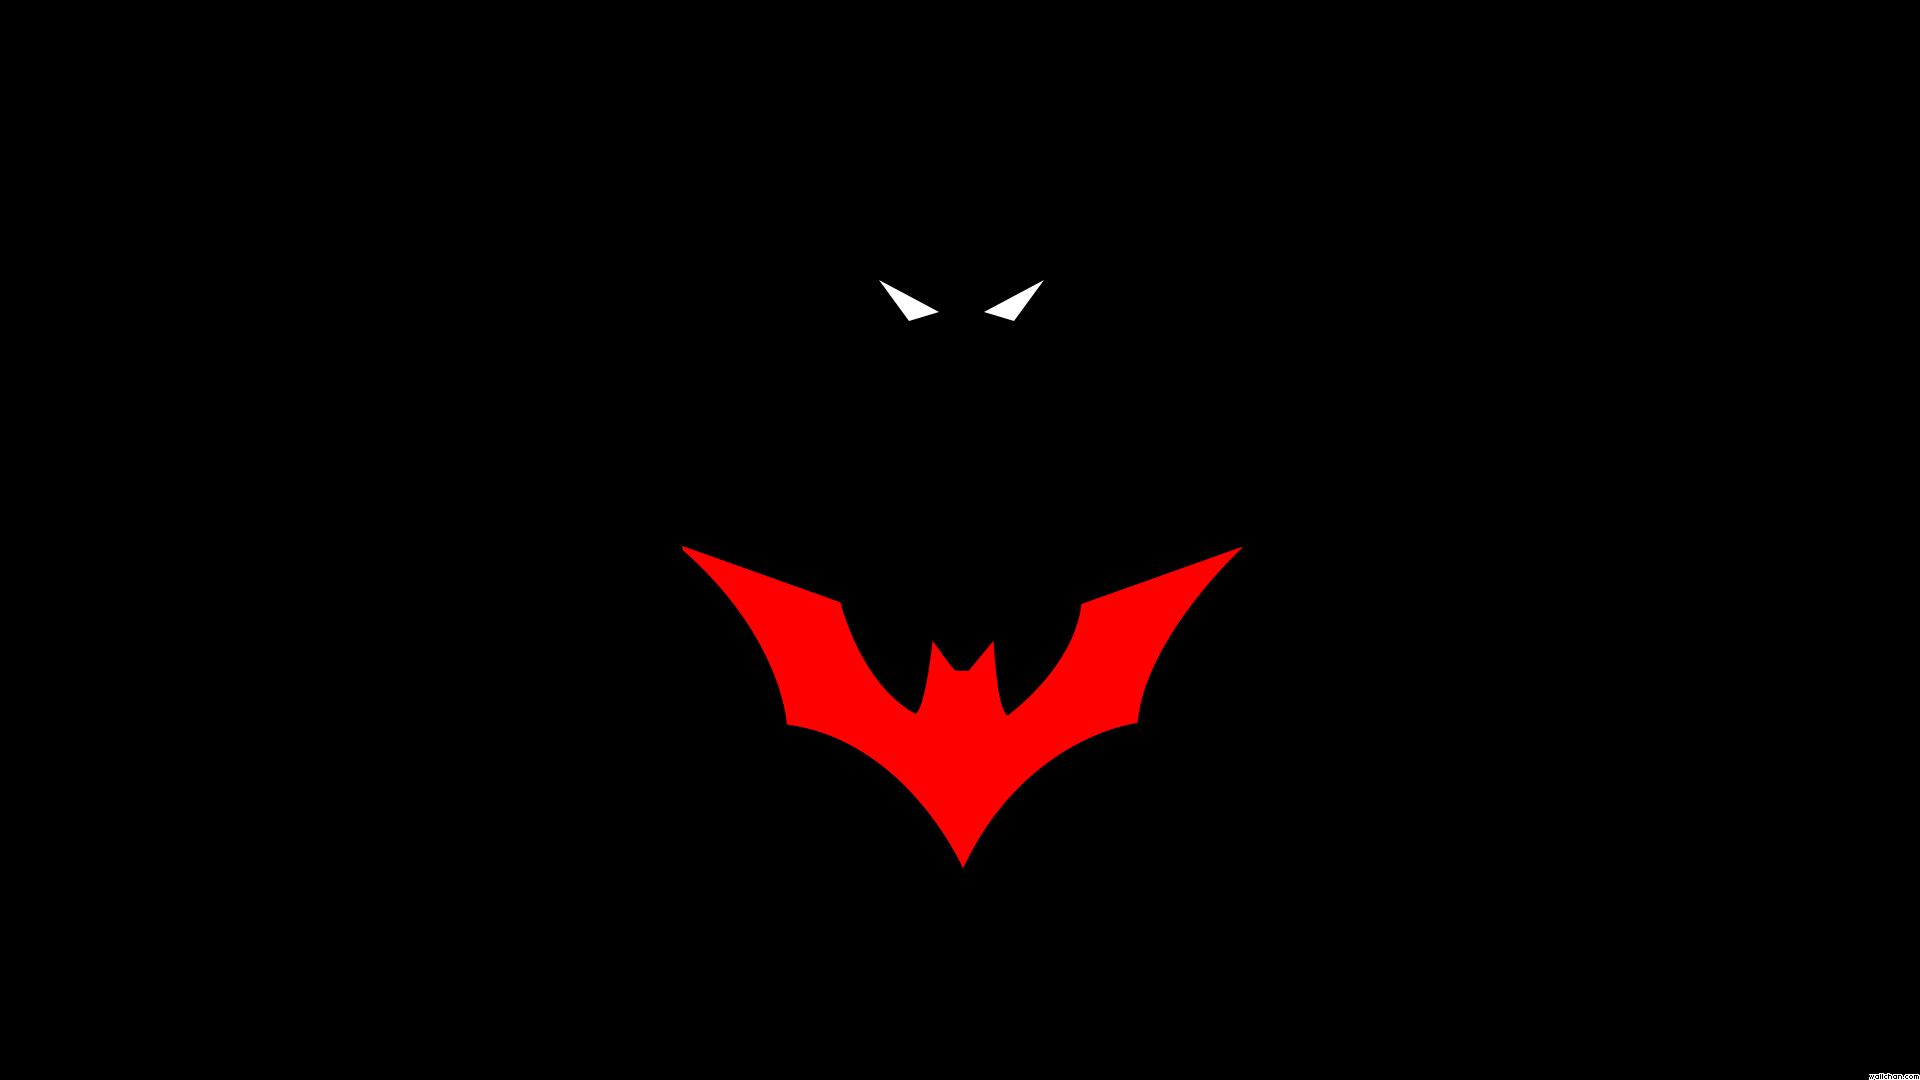 General 1920x1080 Batman Batman Beyond minimalism black red superhero black background simple background artwork